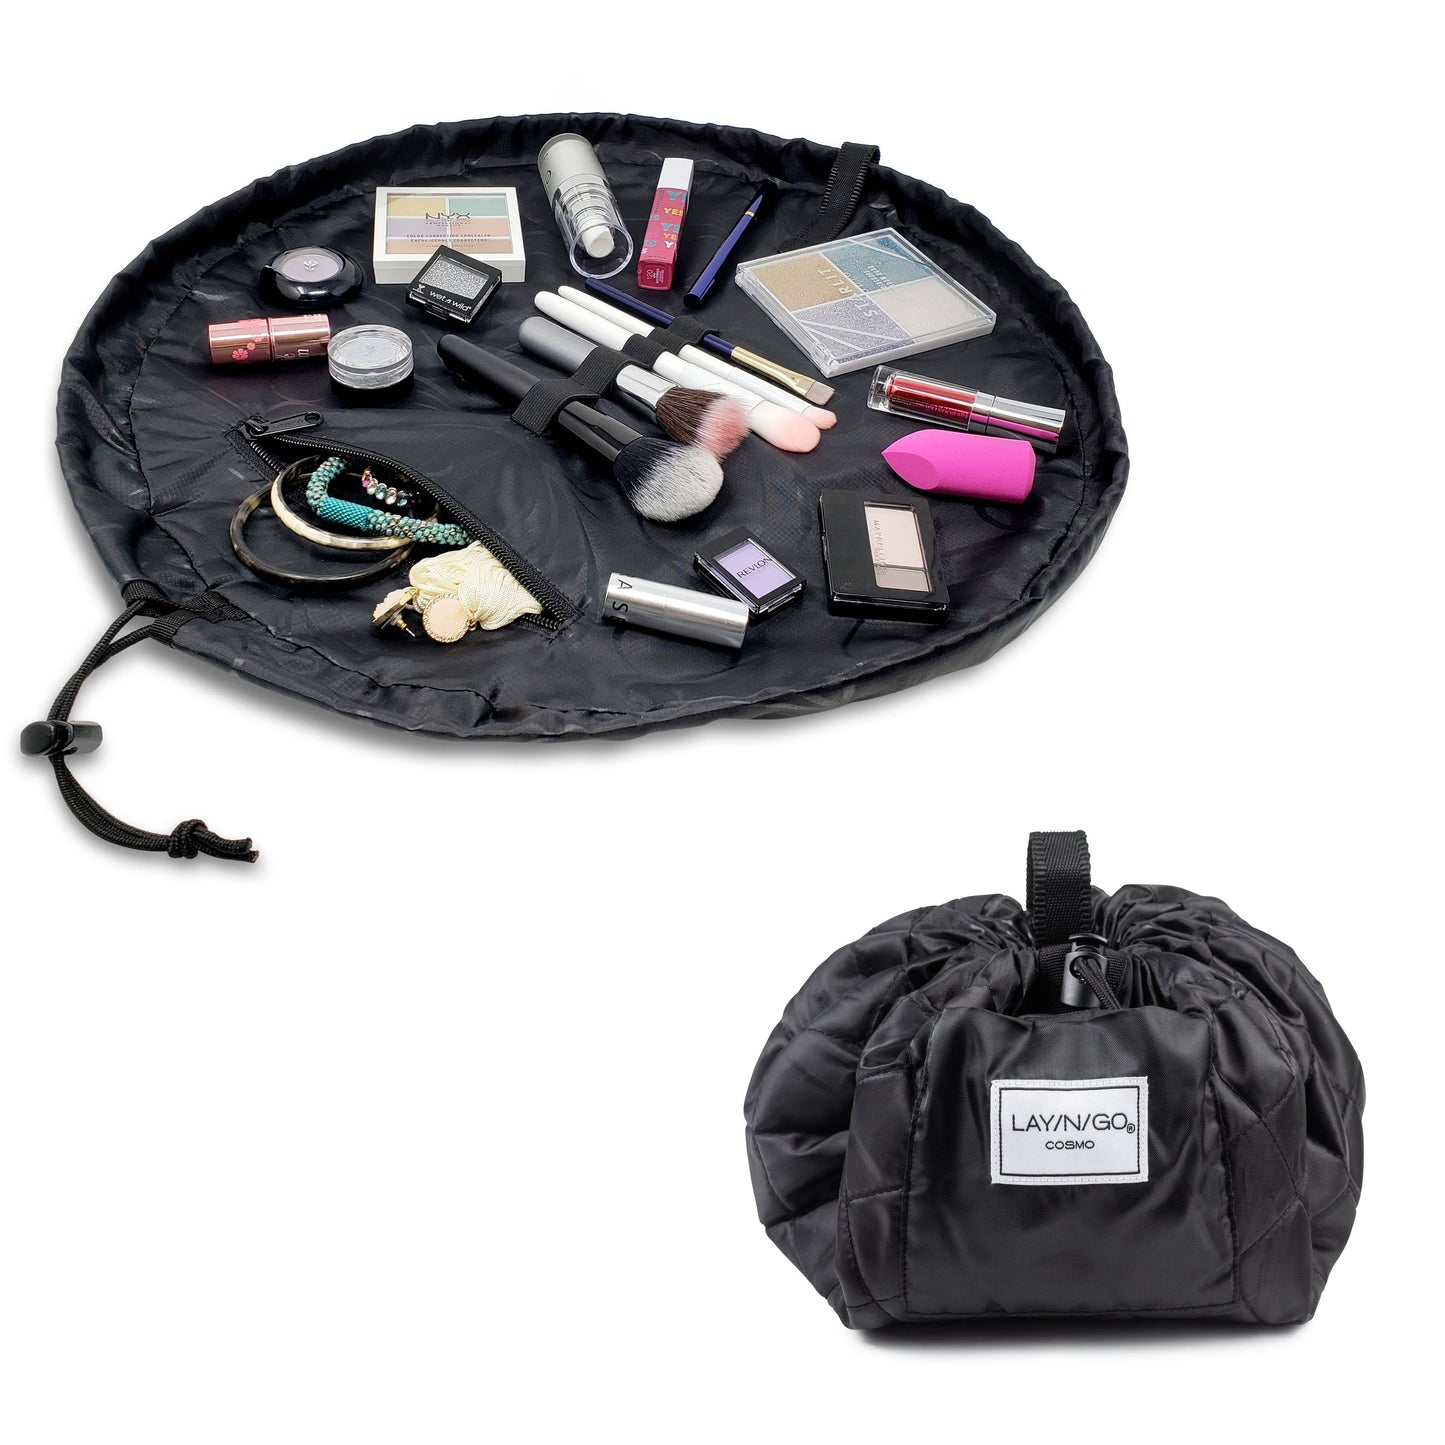 Lay-n-Go Cosmetic Bag